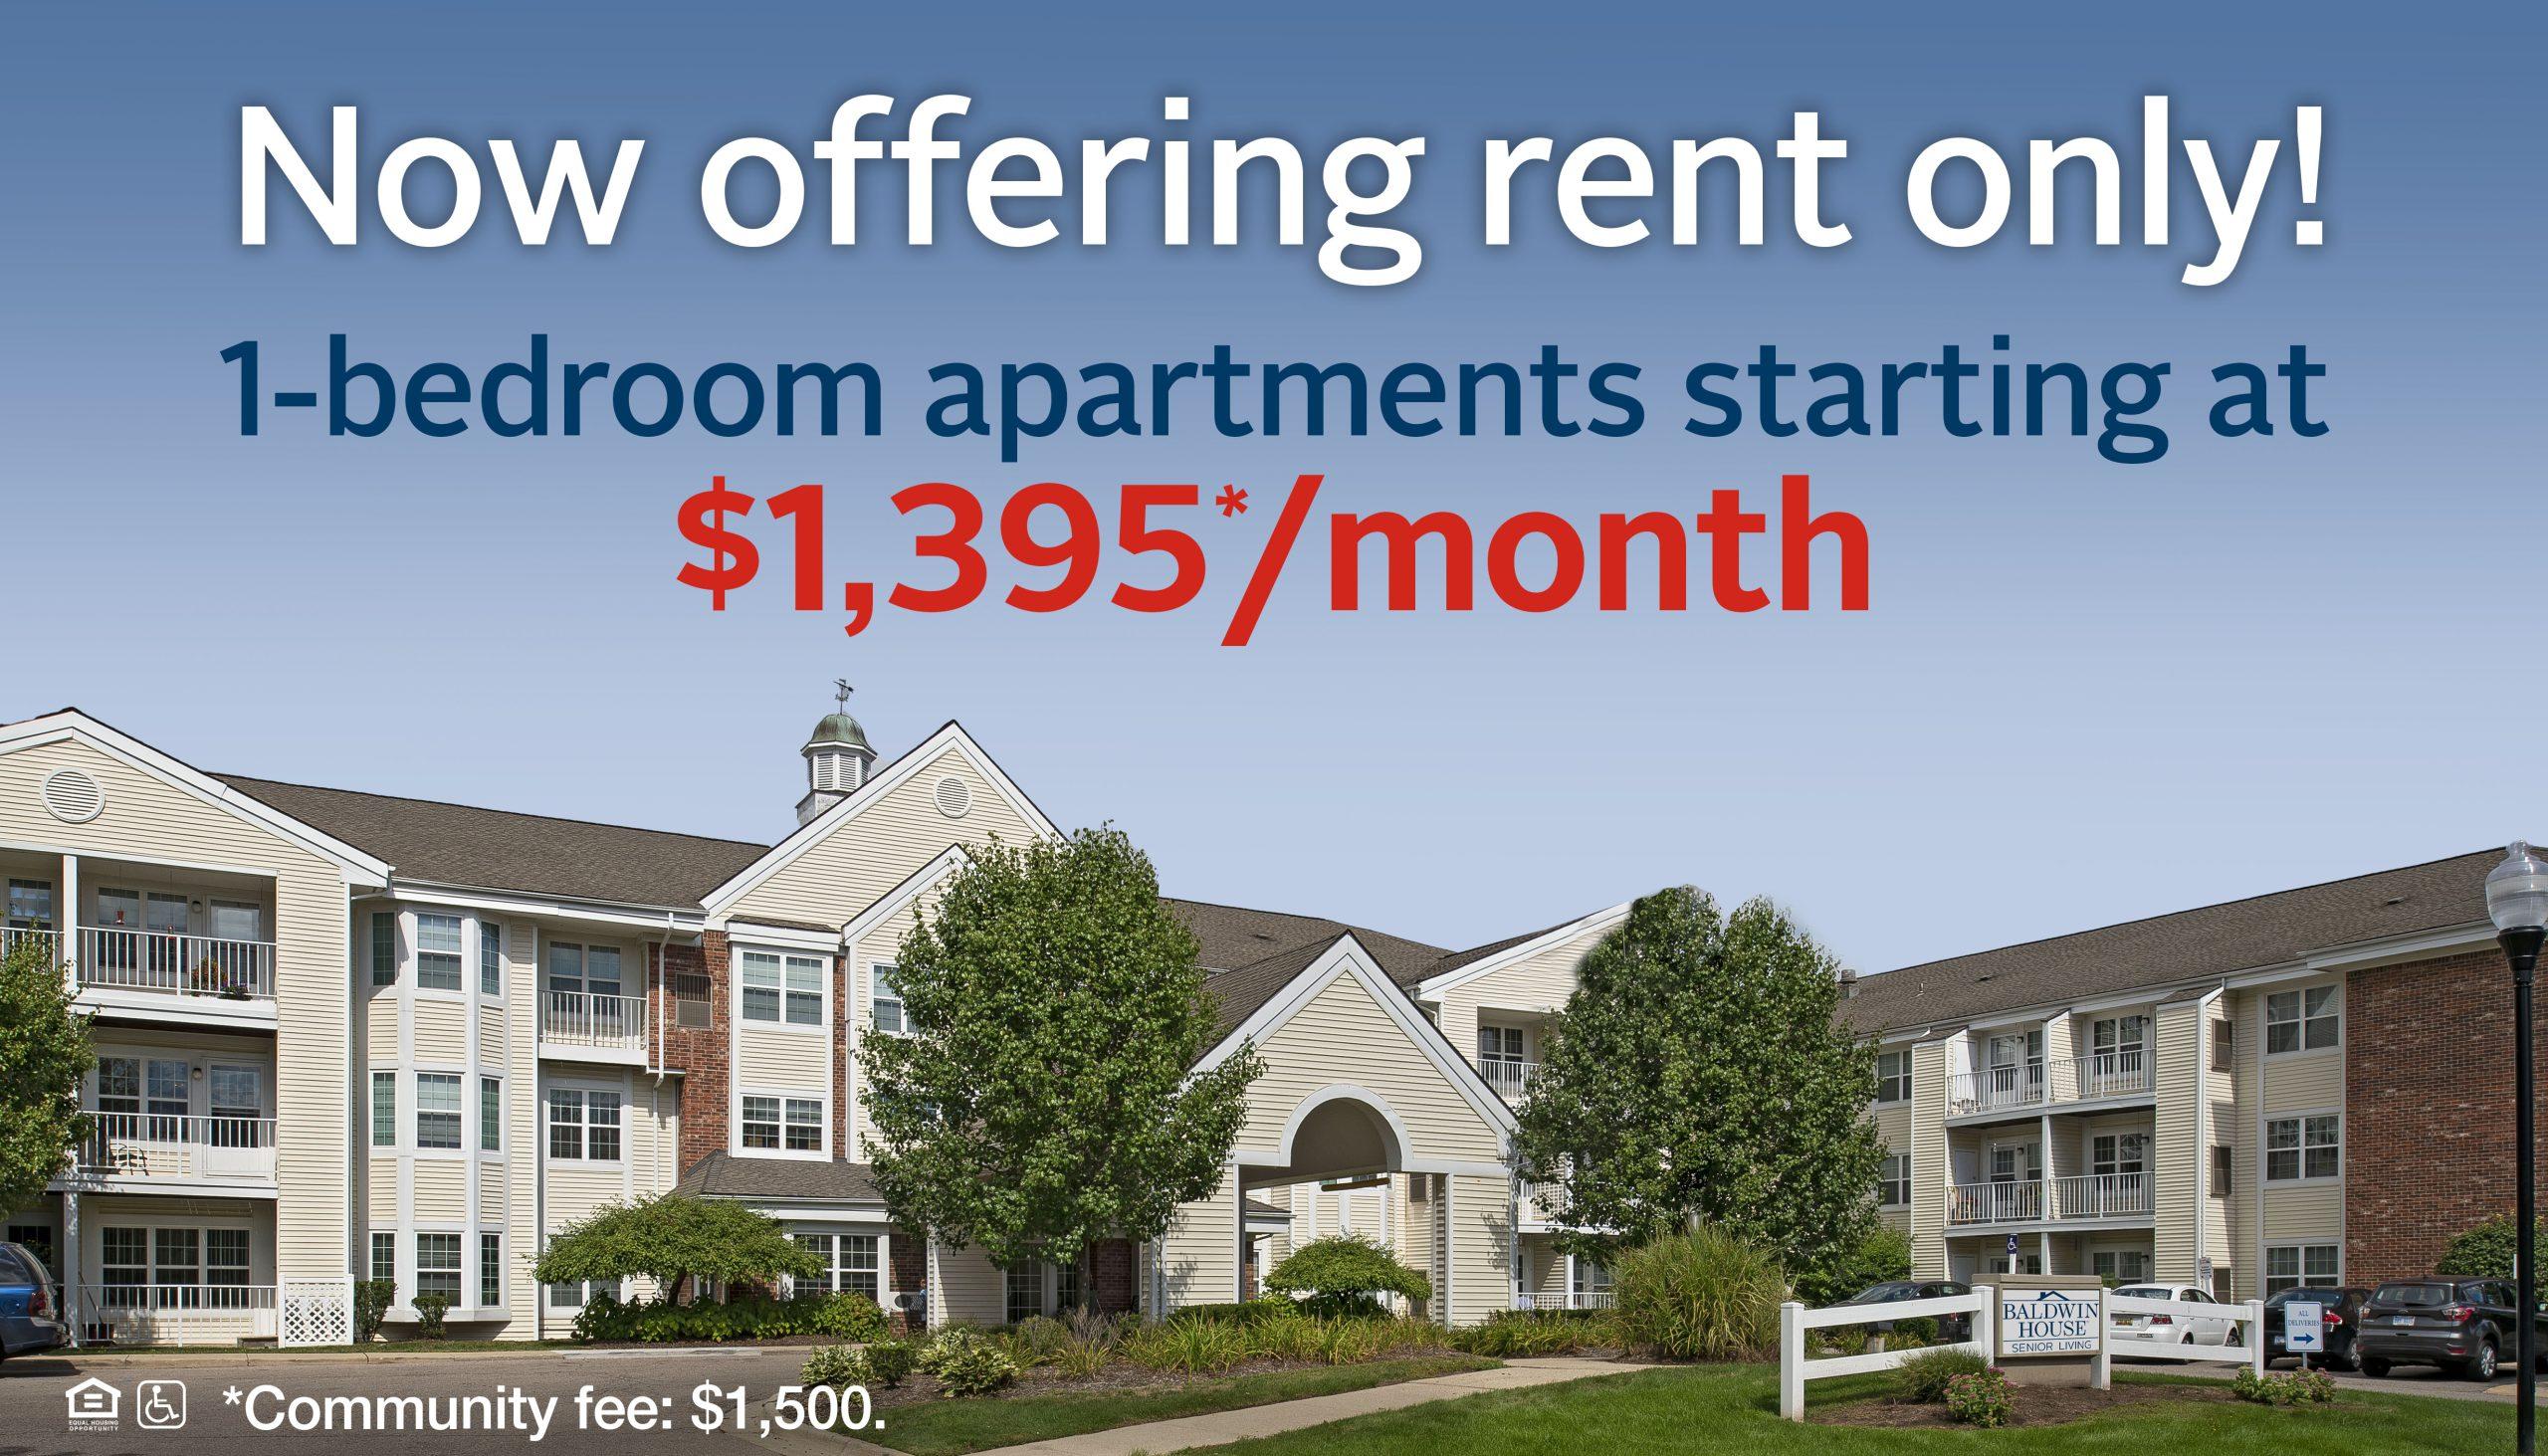 Baldwin House Hazel Park 1 bedroom apartments starting at $1,395 per month